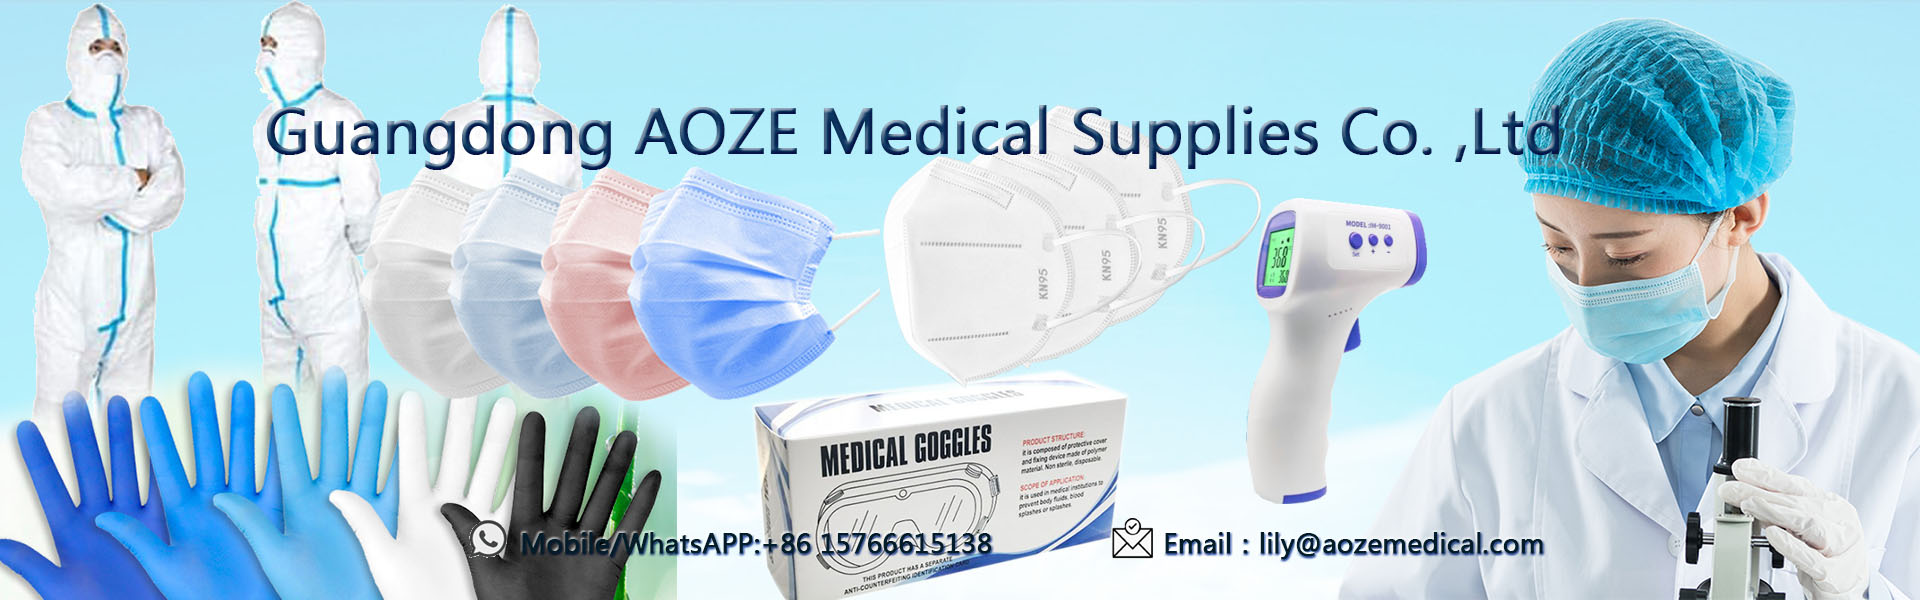 Masque jetable 3ply, masque facial kn95, masque facial chirurgical,Guangdong AOZE Medical Supplies Co.,Ltd